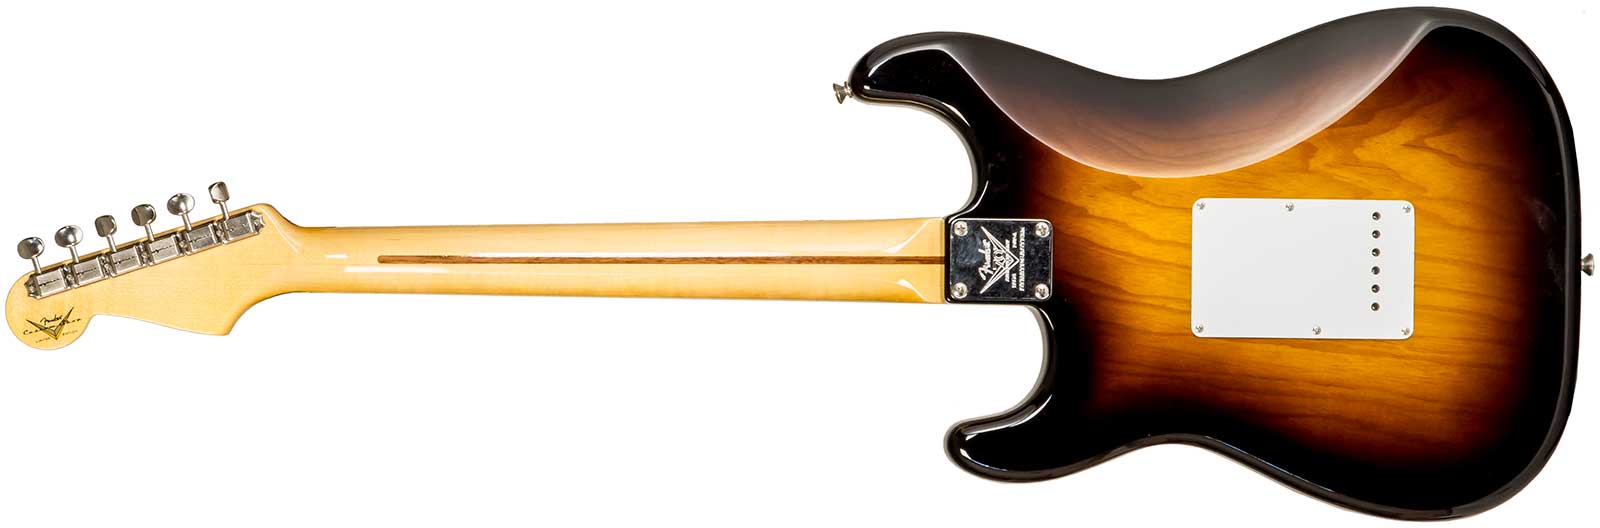 Fender Custom Shop Strat 1954 70th Anniv. #xn4597 3s Trem Mn - Time Capsule 2-color Sunburst - Elektrische gitaar in Str-vorm - Variation 1